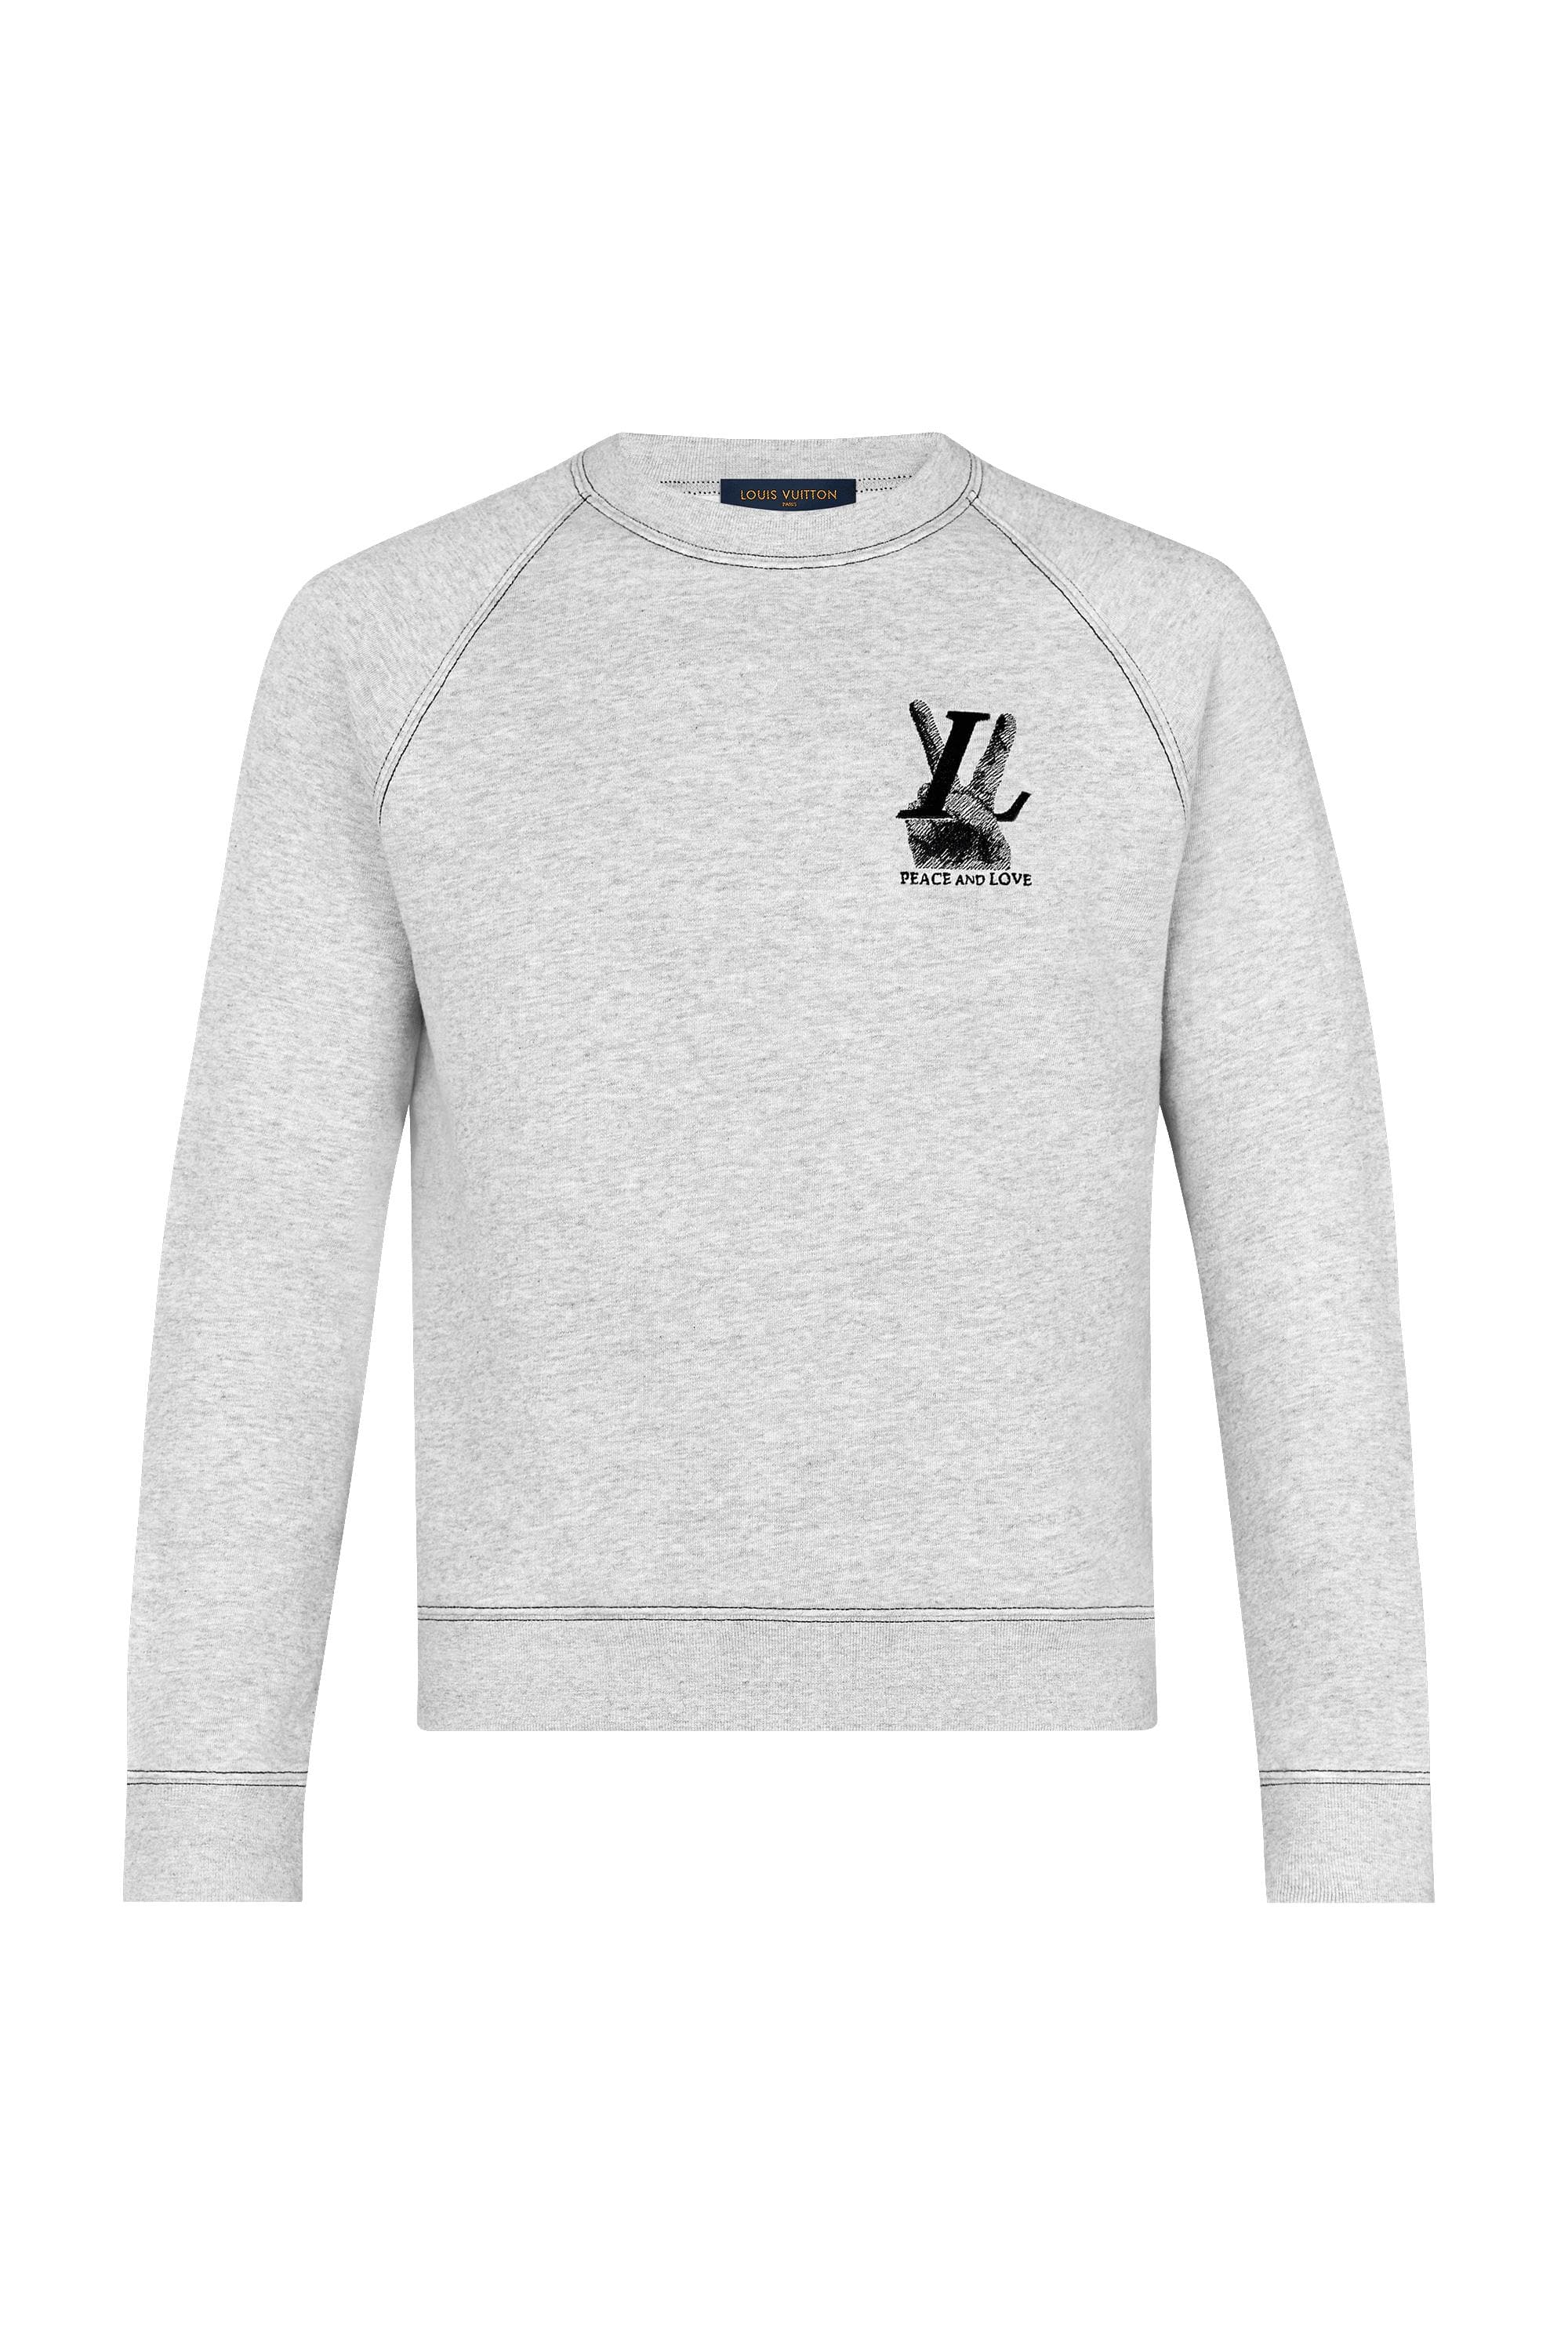 Louis Vuitton LV Logo - HAND LV LOGO SWEATSHIRT - READY-TO-WEAR | LOUIS VUITTON ®